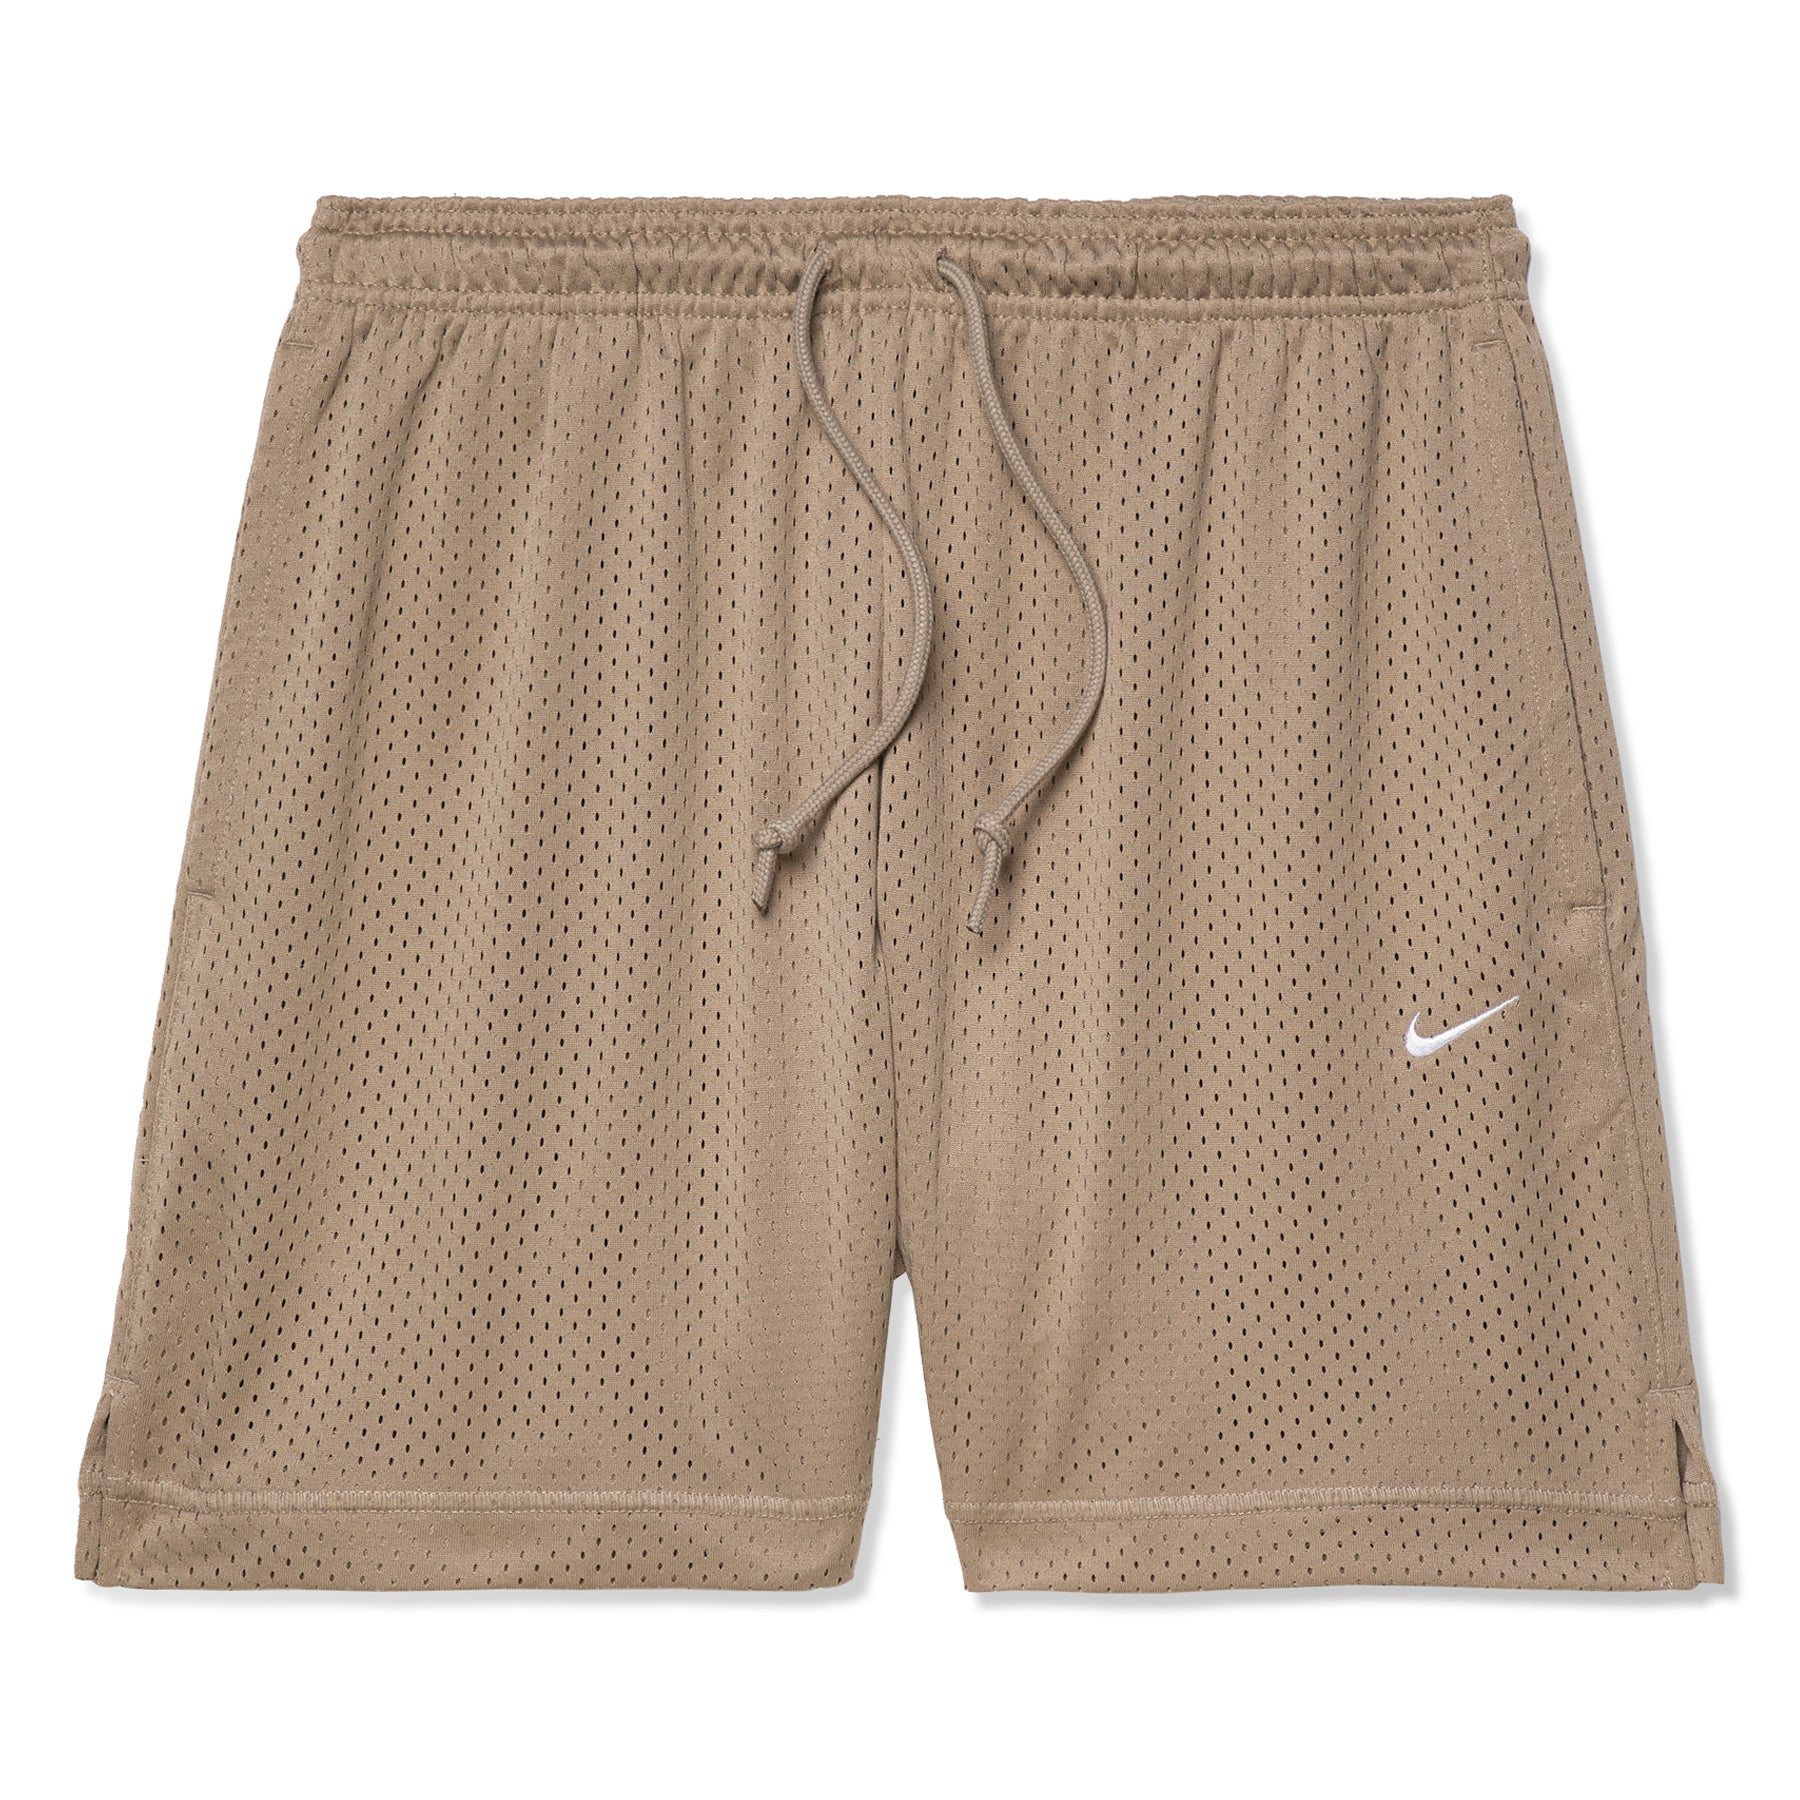 – Concepts Nike Mesh Sportswear Shorts (Khaki/White)